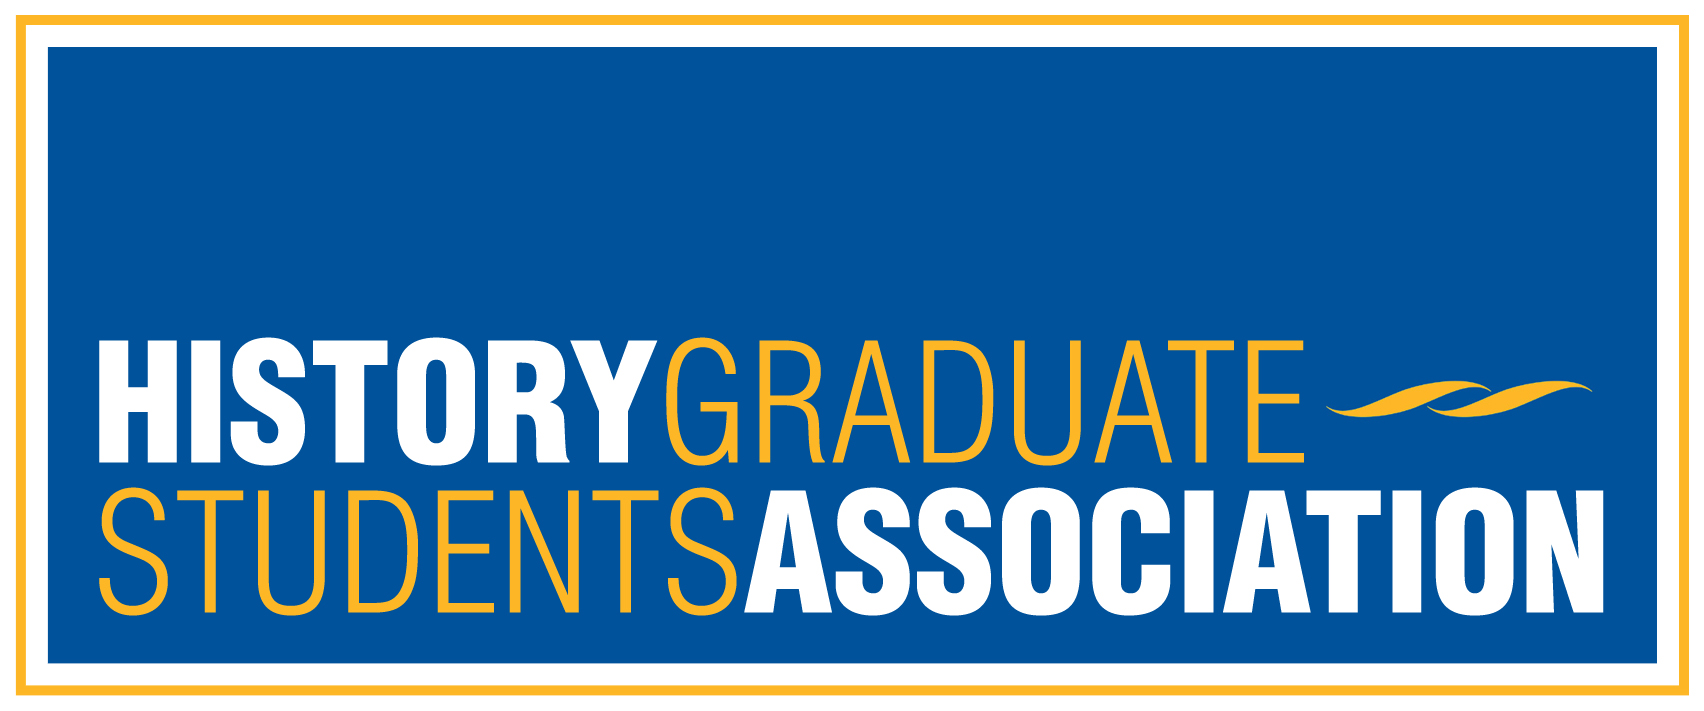 History Graduate Students Association logo